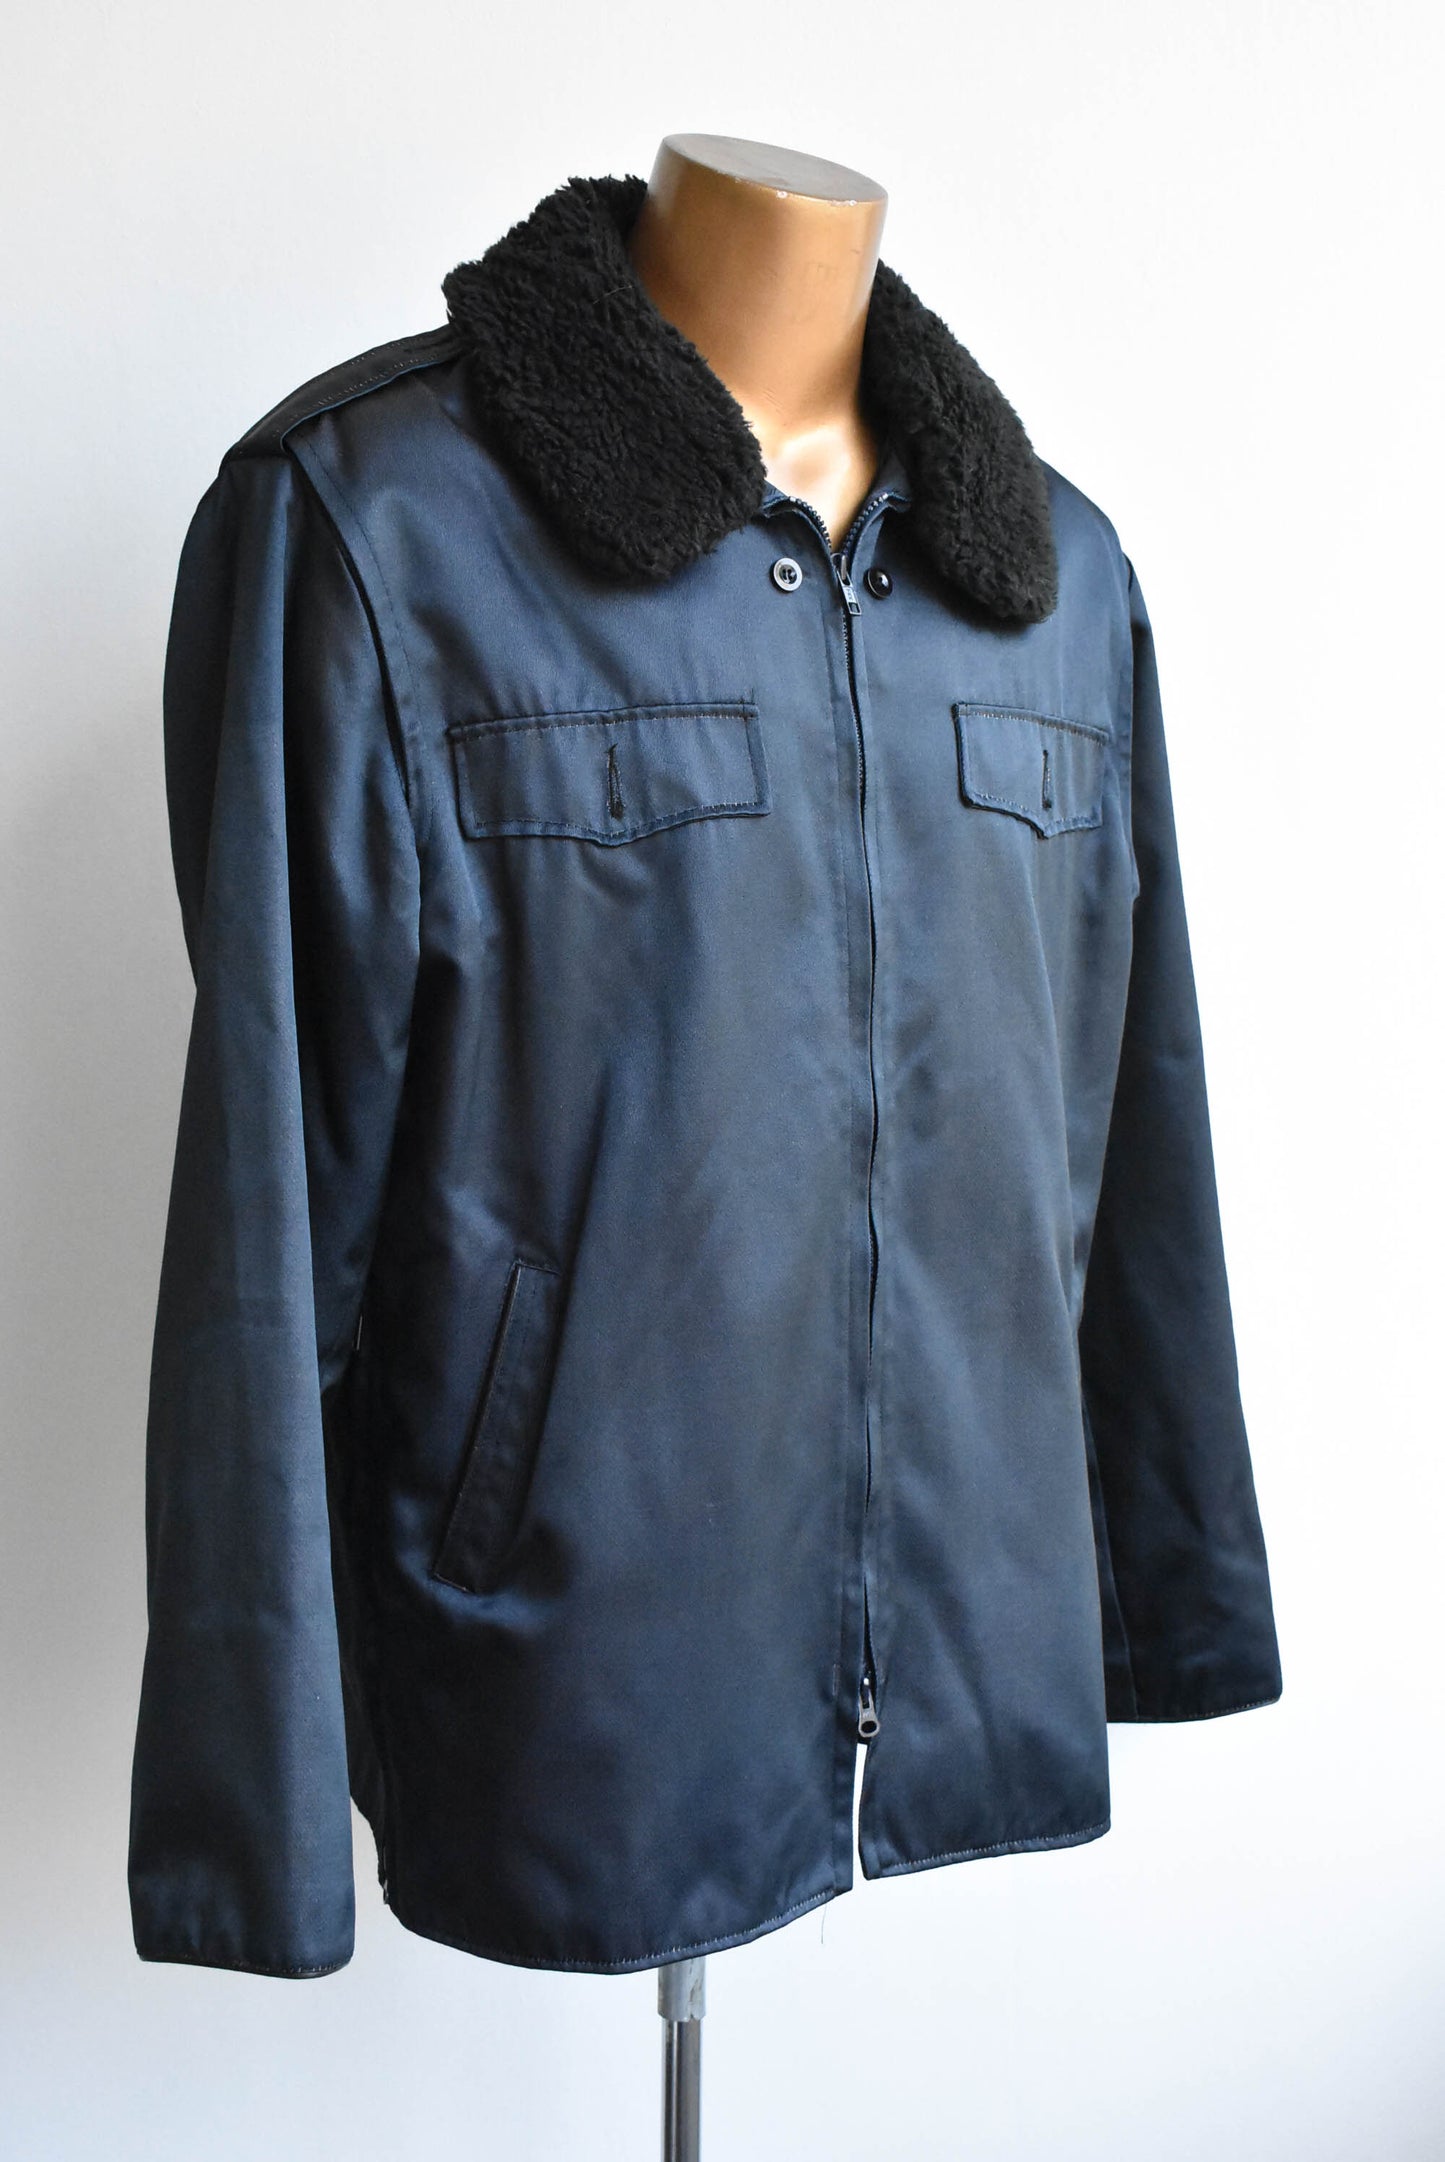 Eagle 2 Vintage Made in New Zealand waterproof jacket,